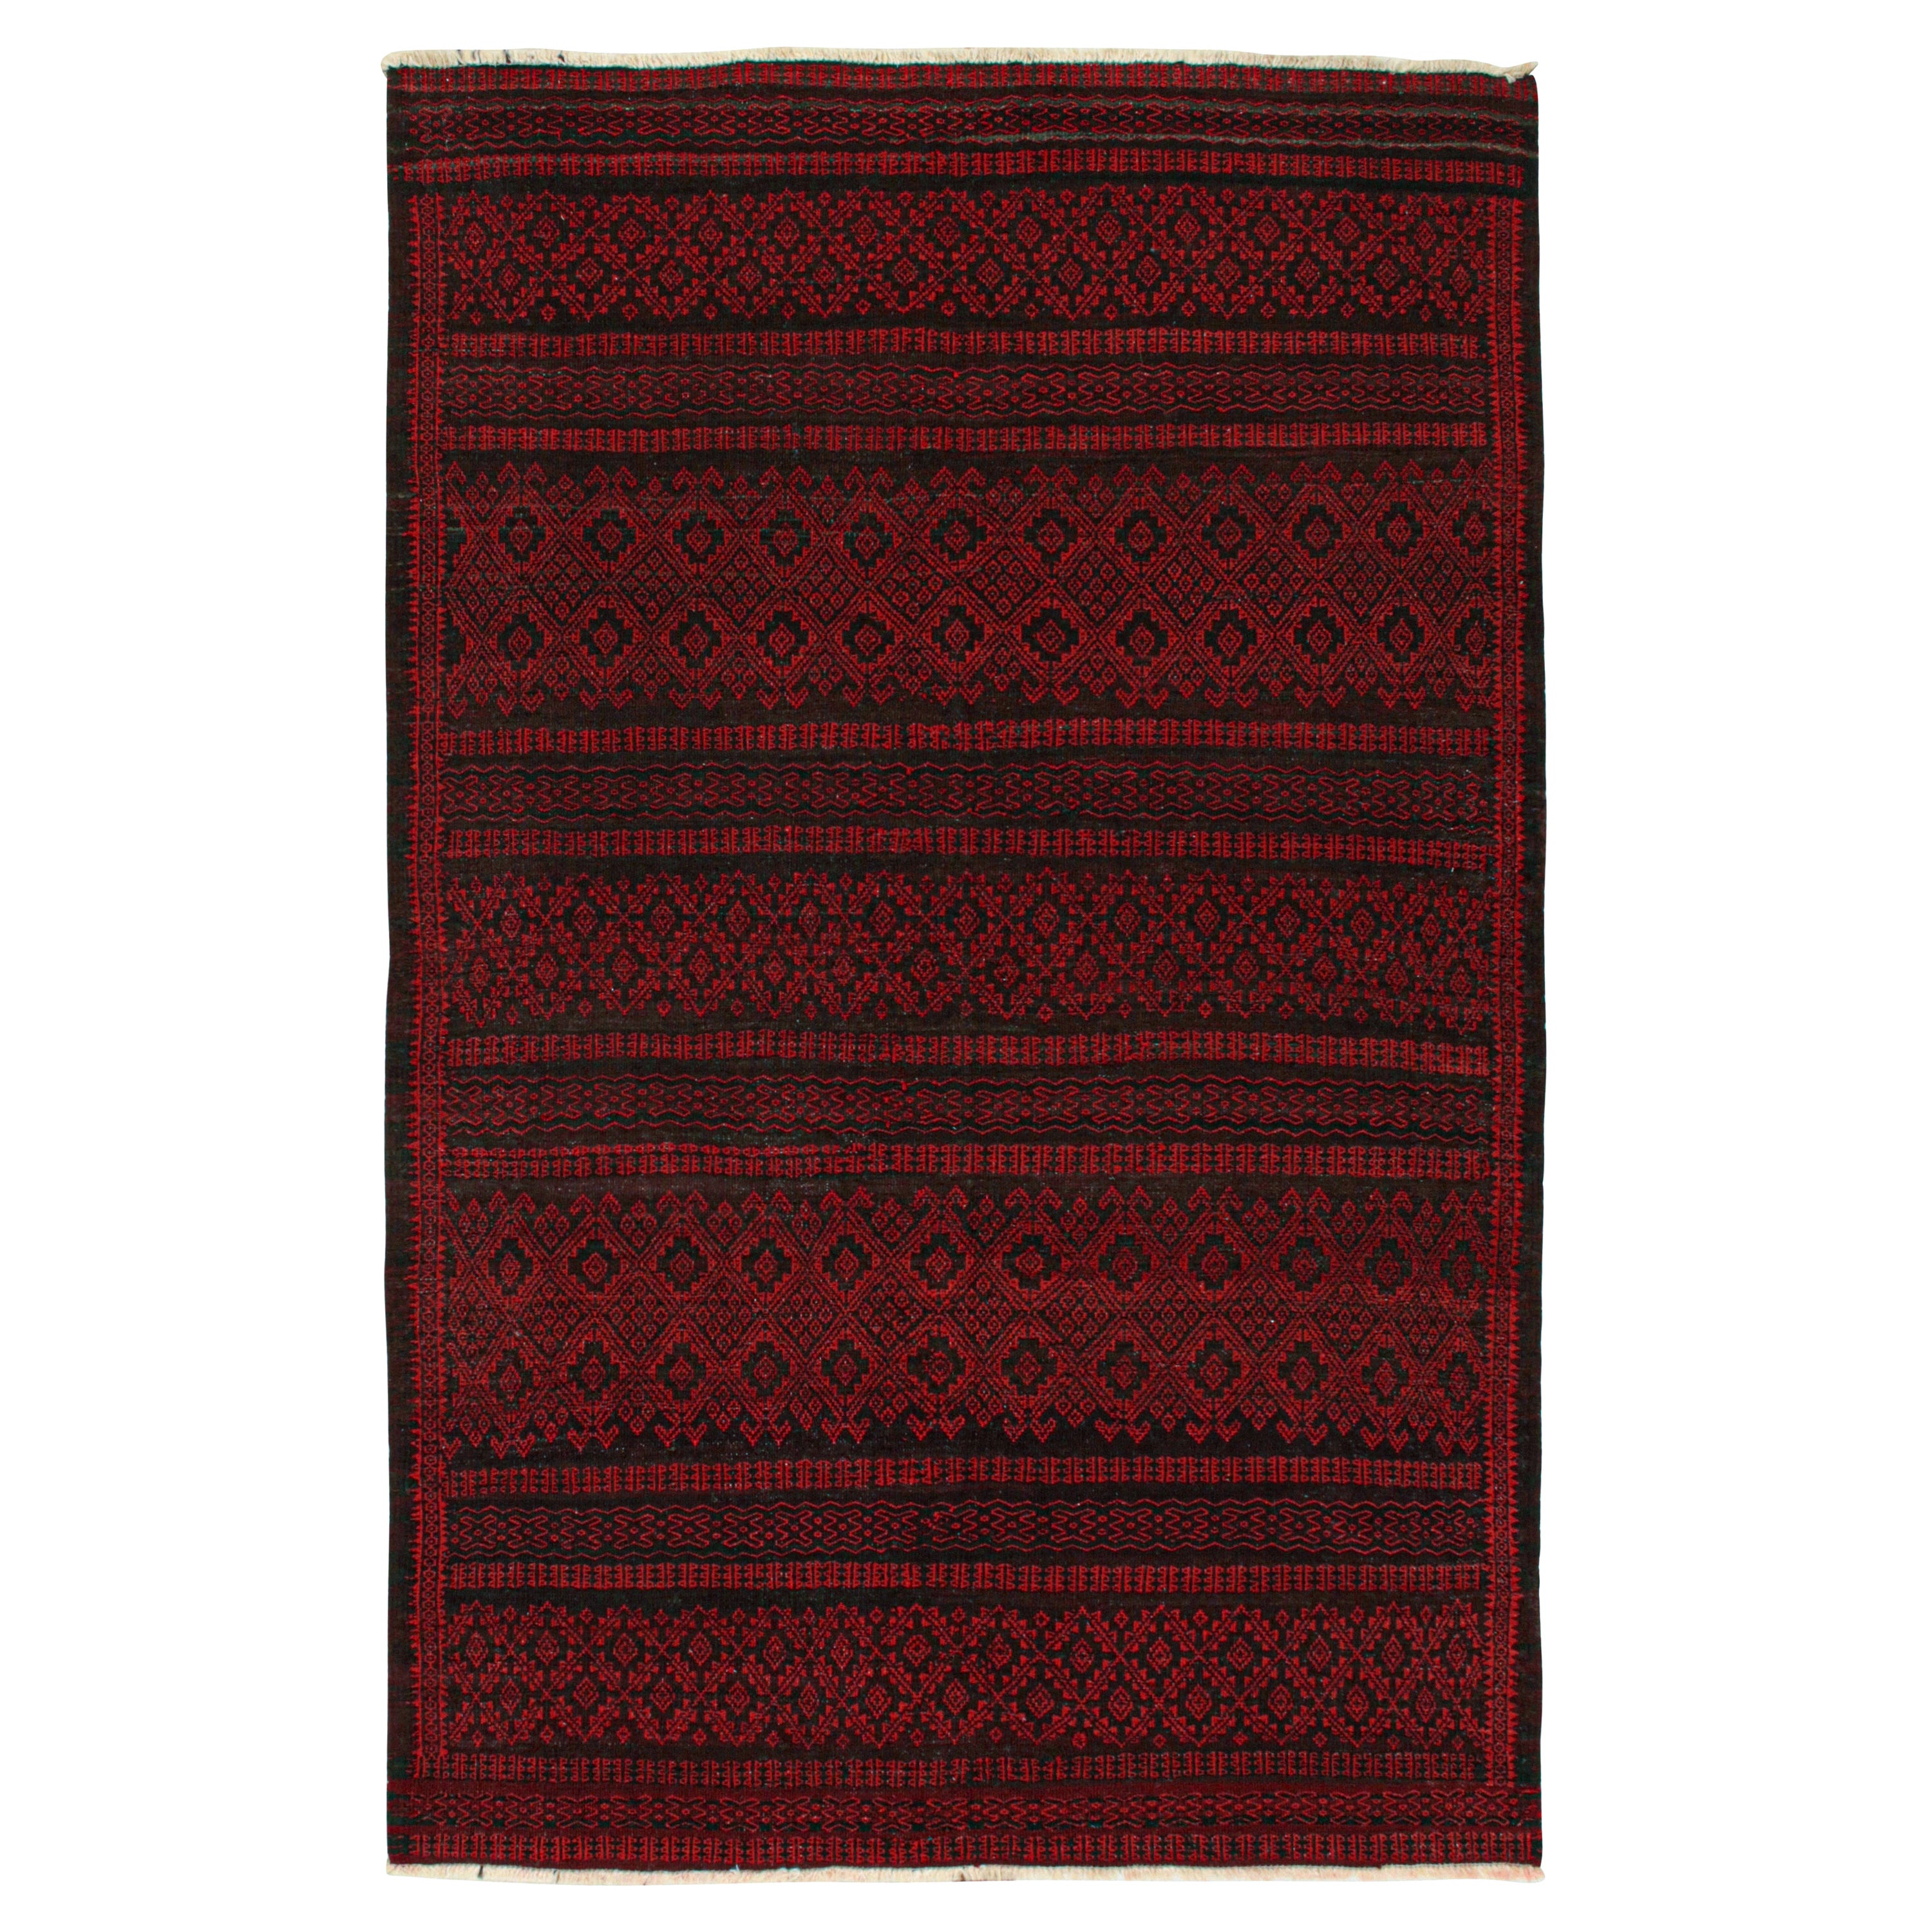 Vintage Persian Kilim in Red and Black Geometric Patterns by Rug & Kilim